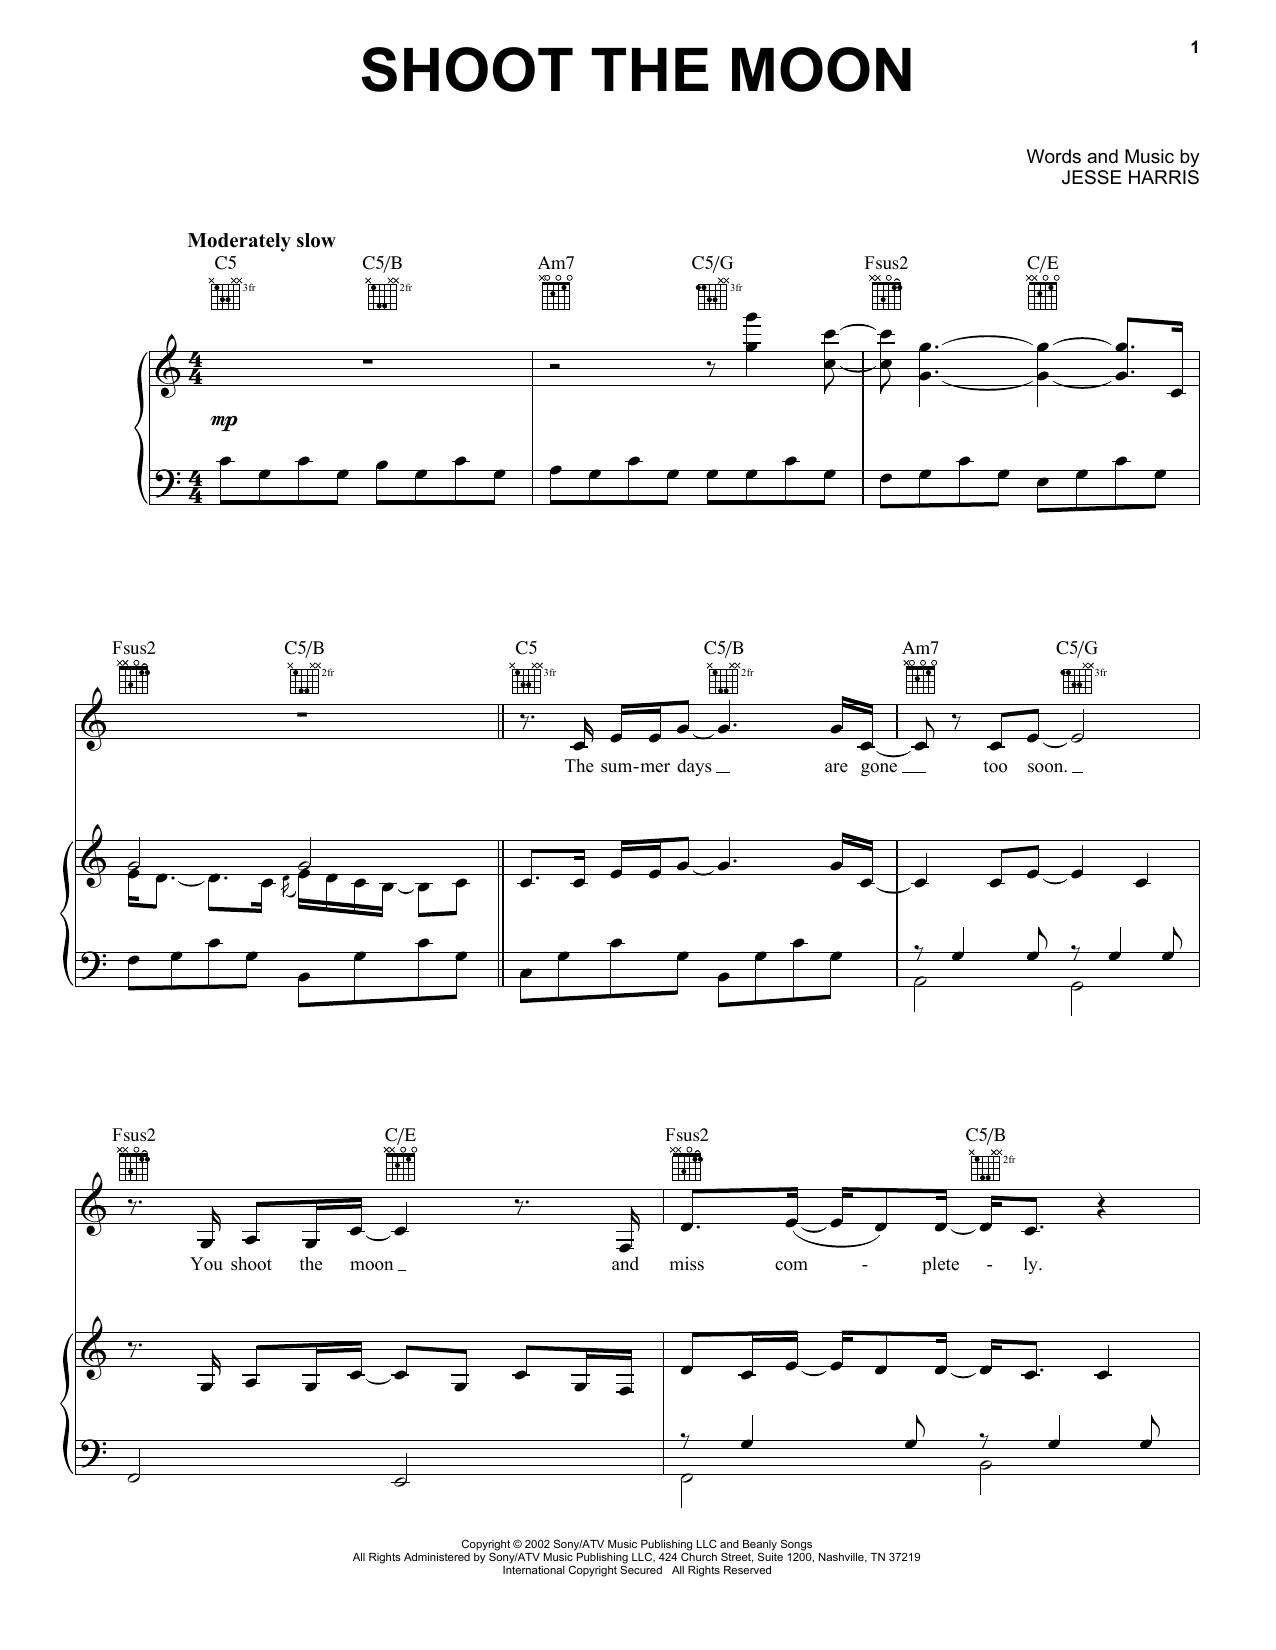 Norah Jones Shoot The Moon Sheet Music Notes & Chords for Easy Guitar Tab - Download or Print PDF